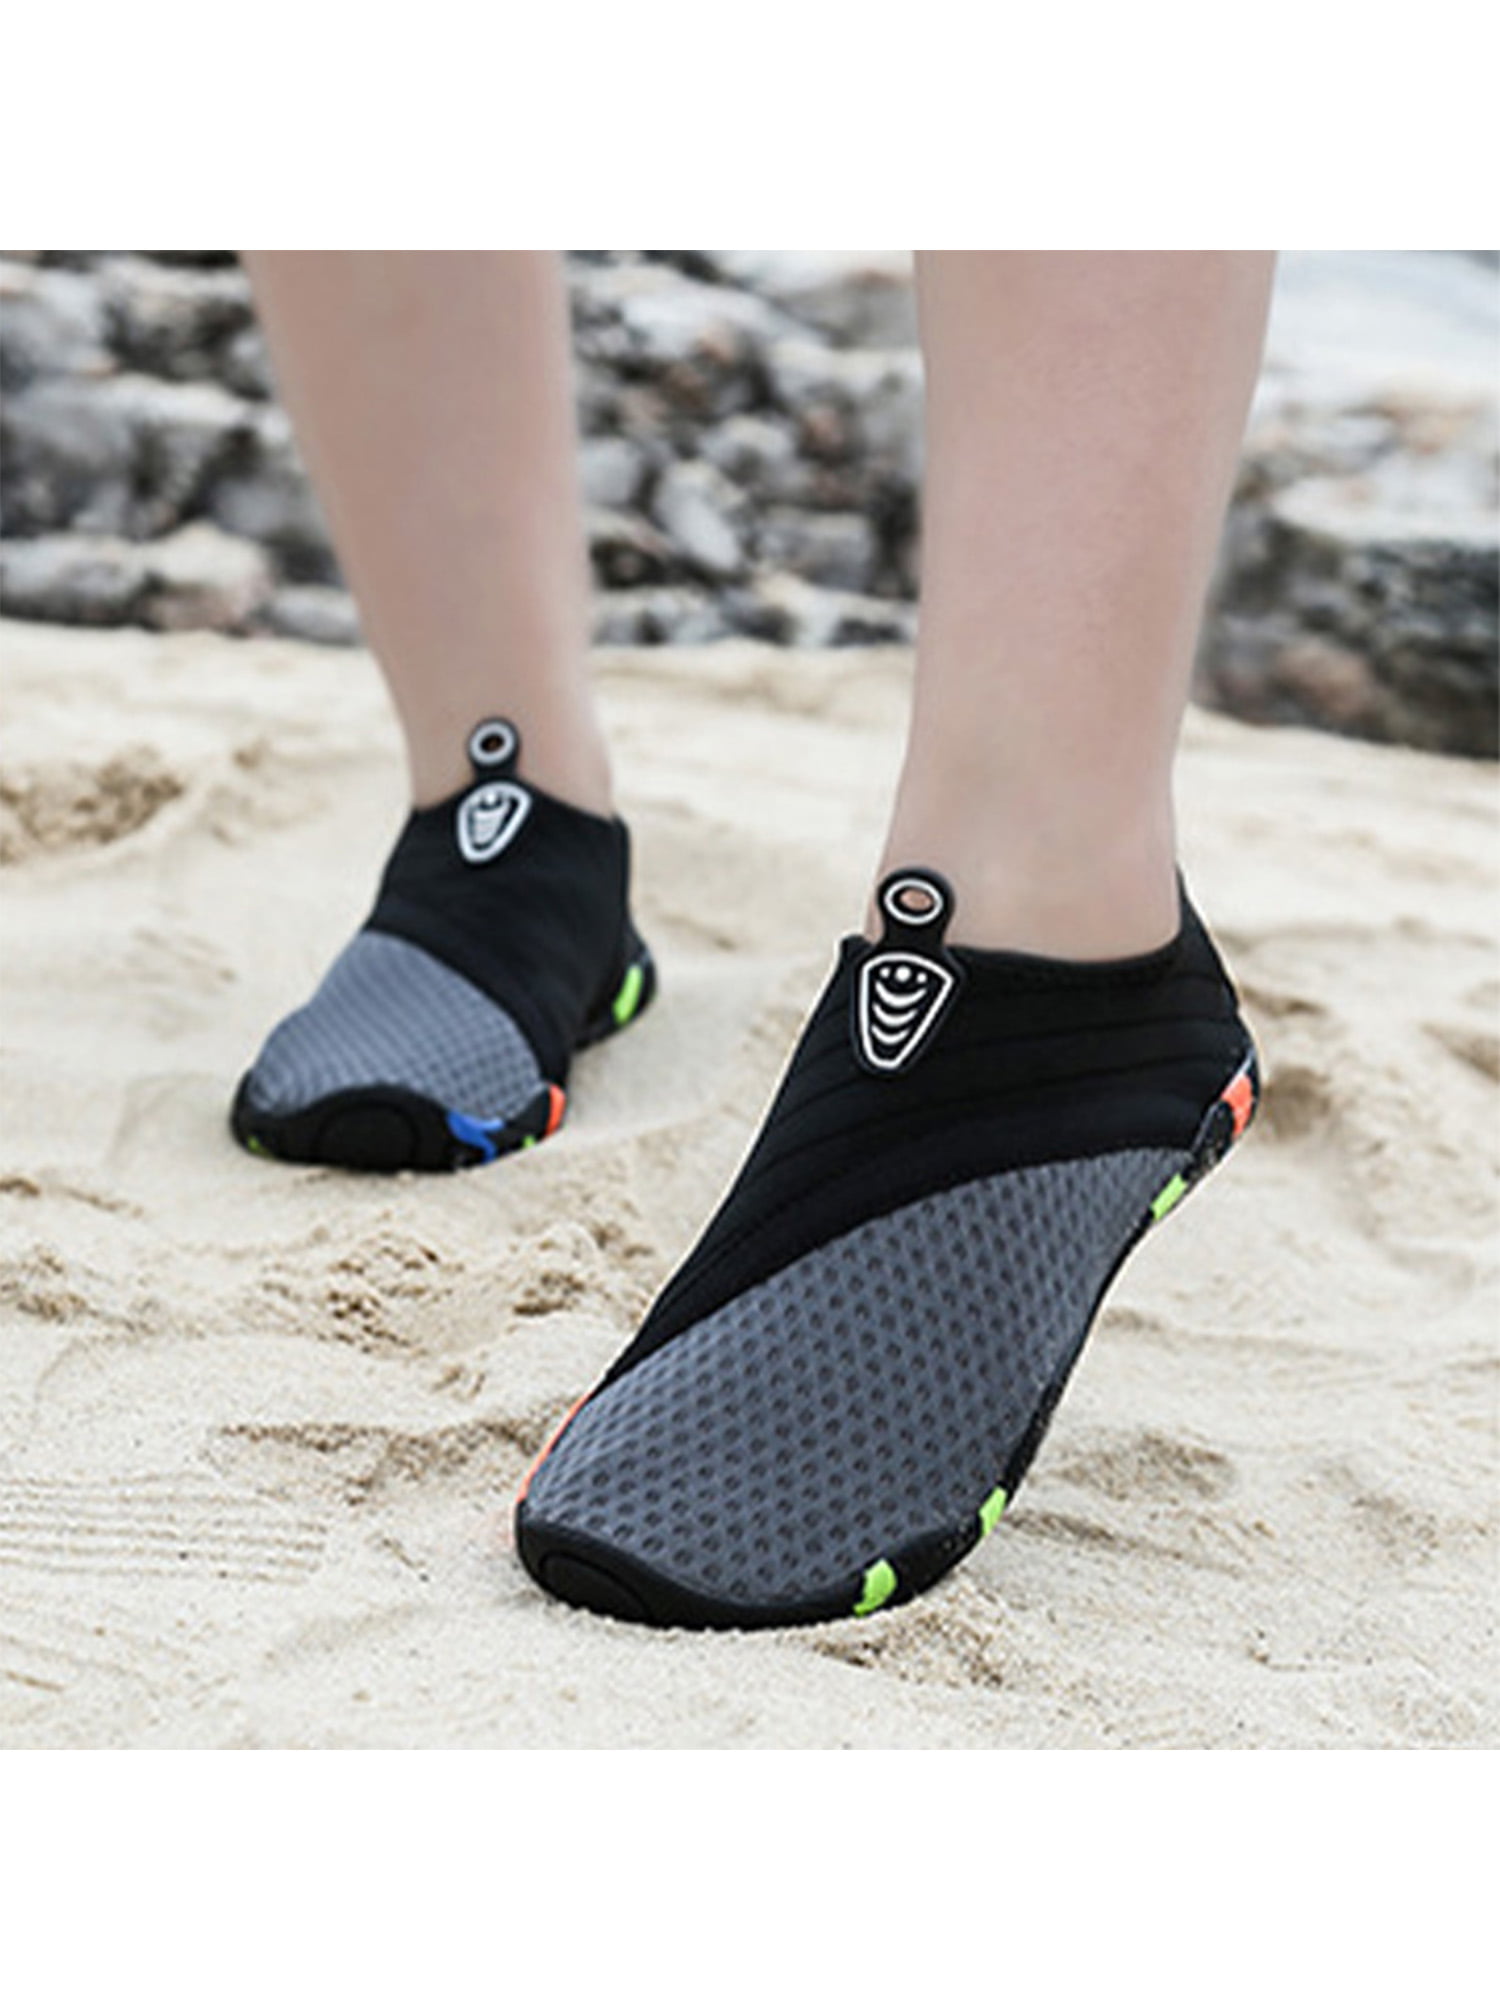 Men Women Water Shoes Barefoot Skin Quick-Dry Aqua Beach Water Swim Sports Socks 